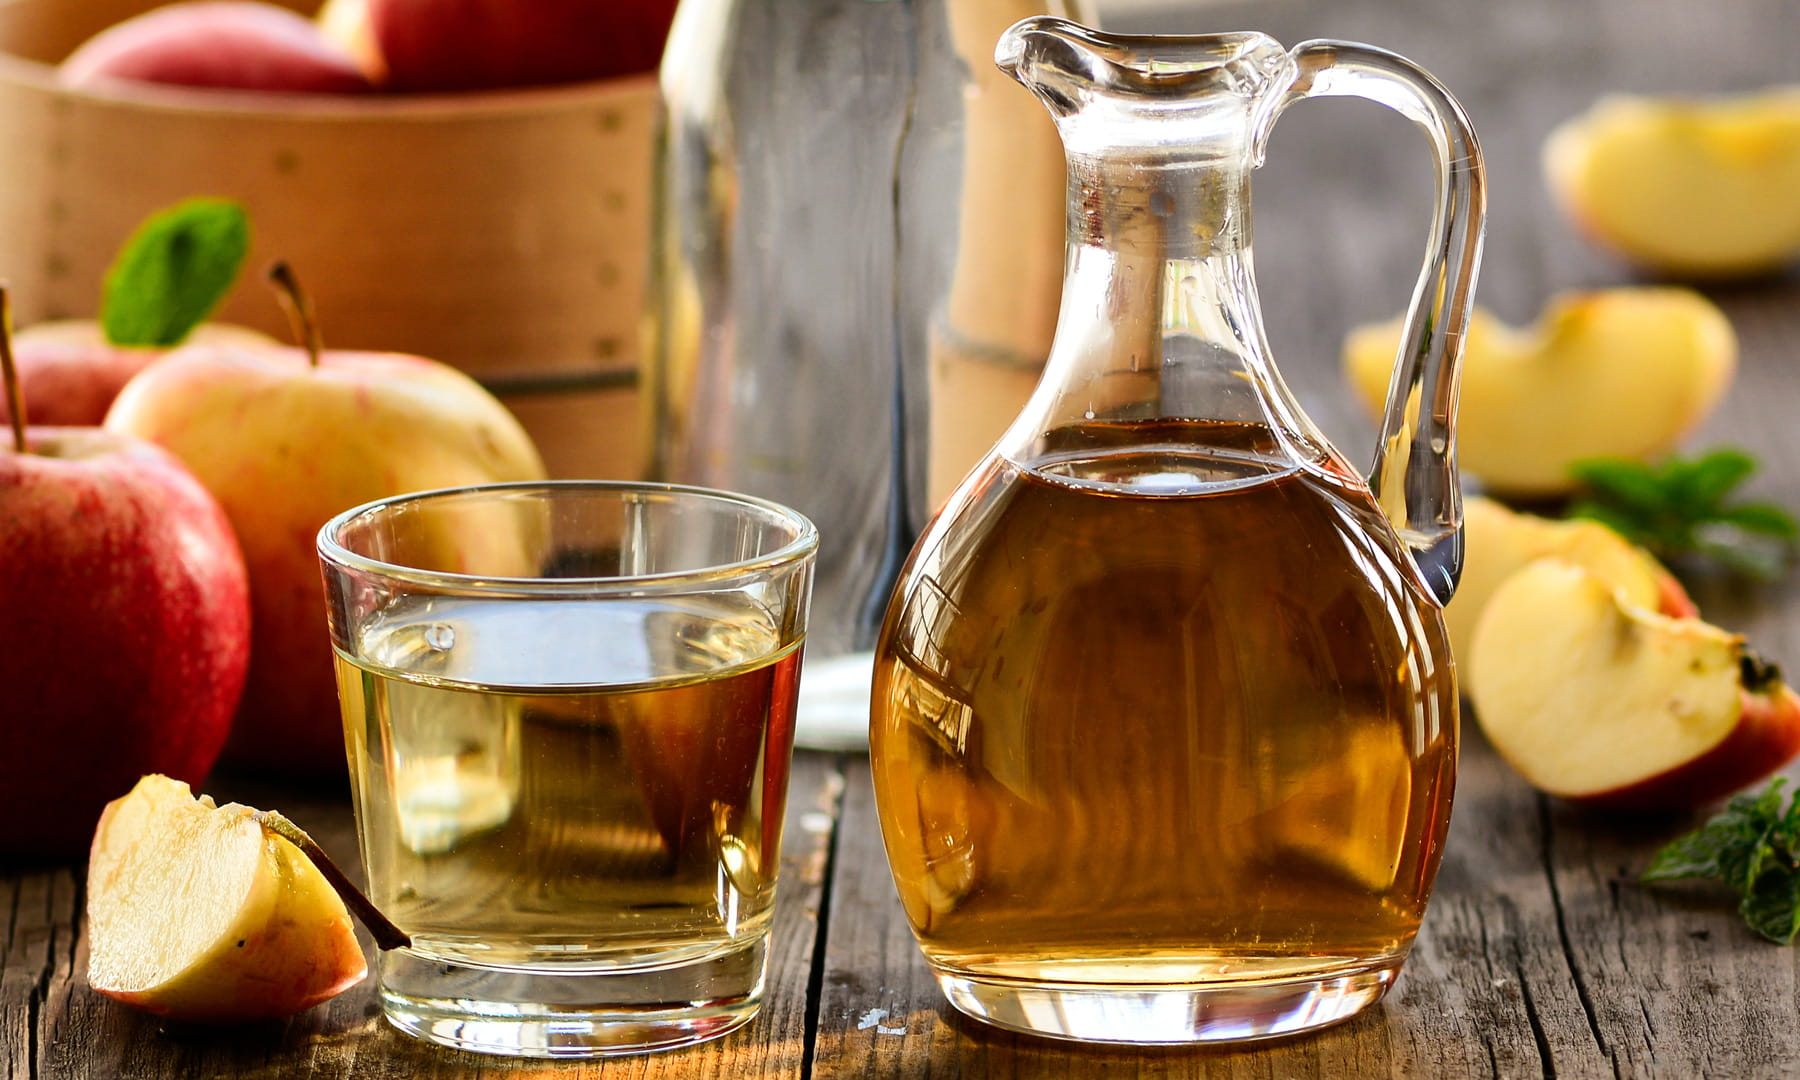 Does vinegar have health benefits? | Ohio State Medical Center